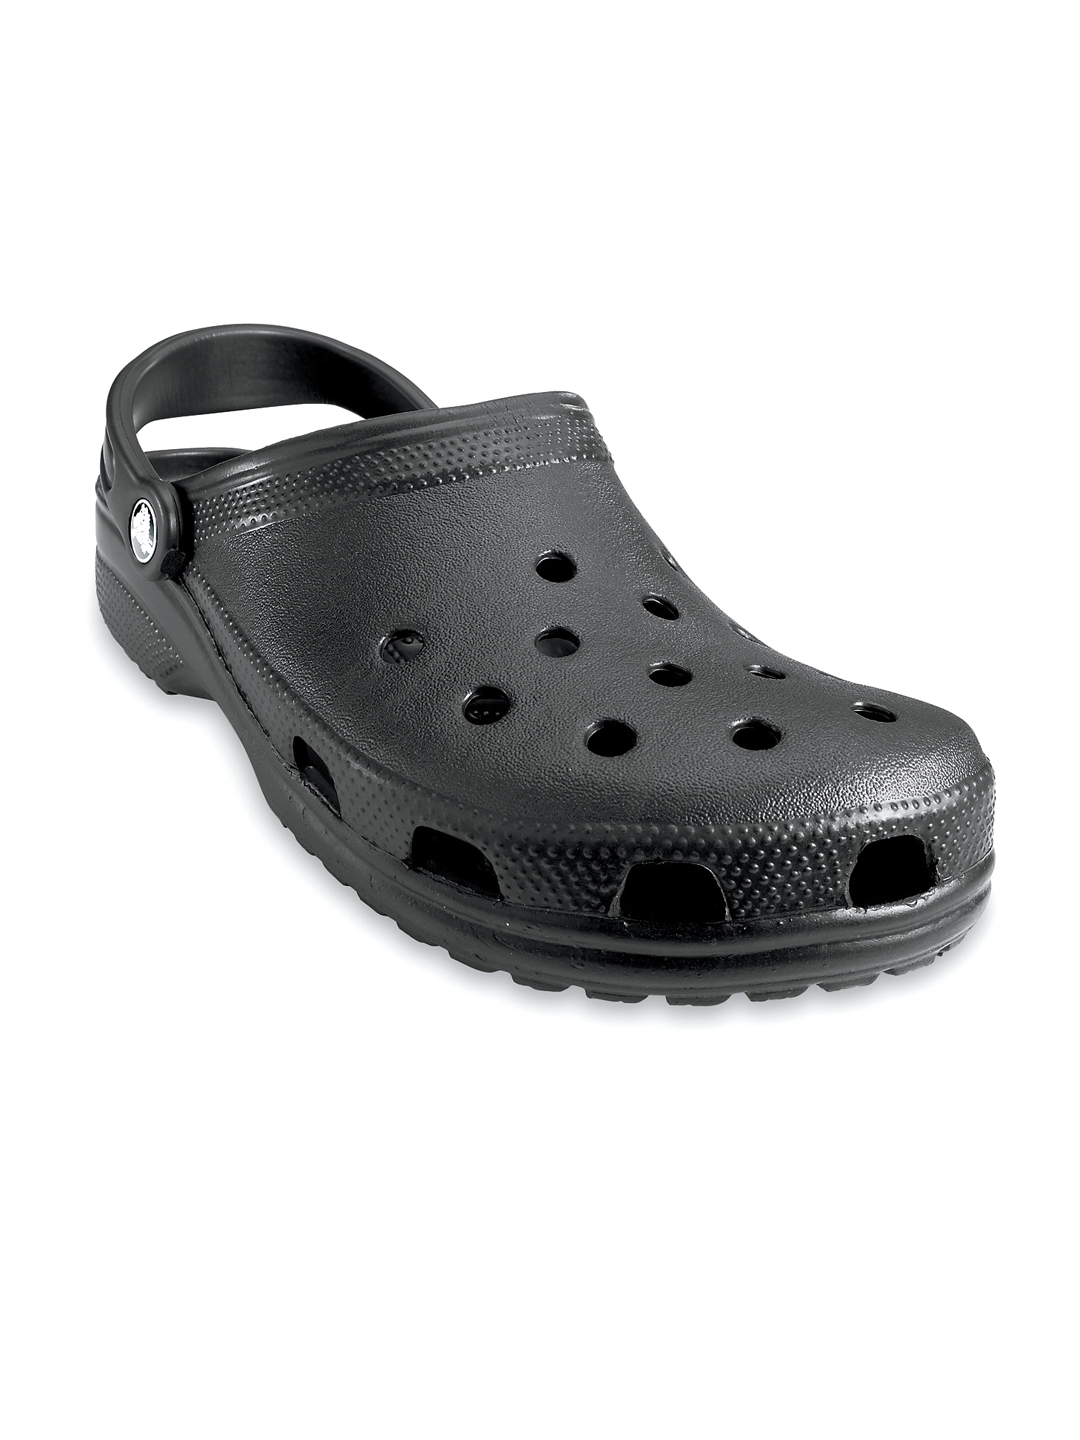 Buy Crocs Men Black Clogs - Flip Flops for Men 1383769 | Myntra